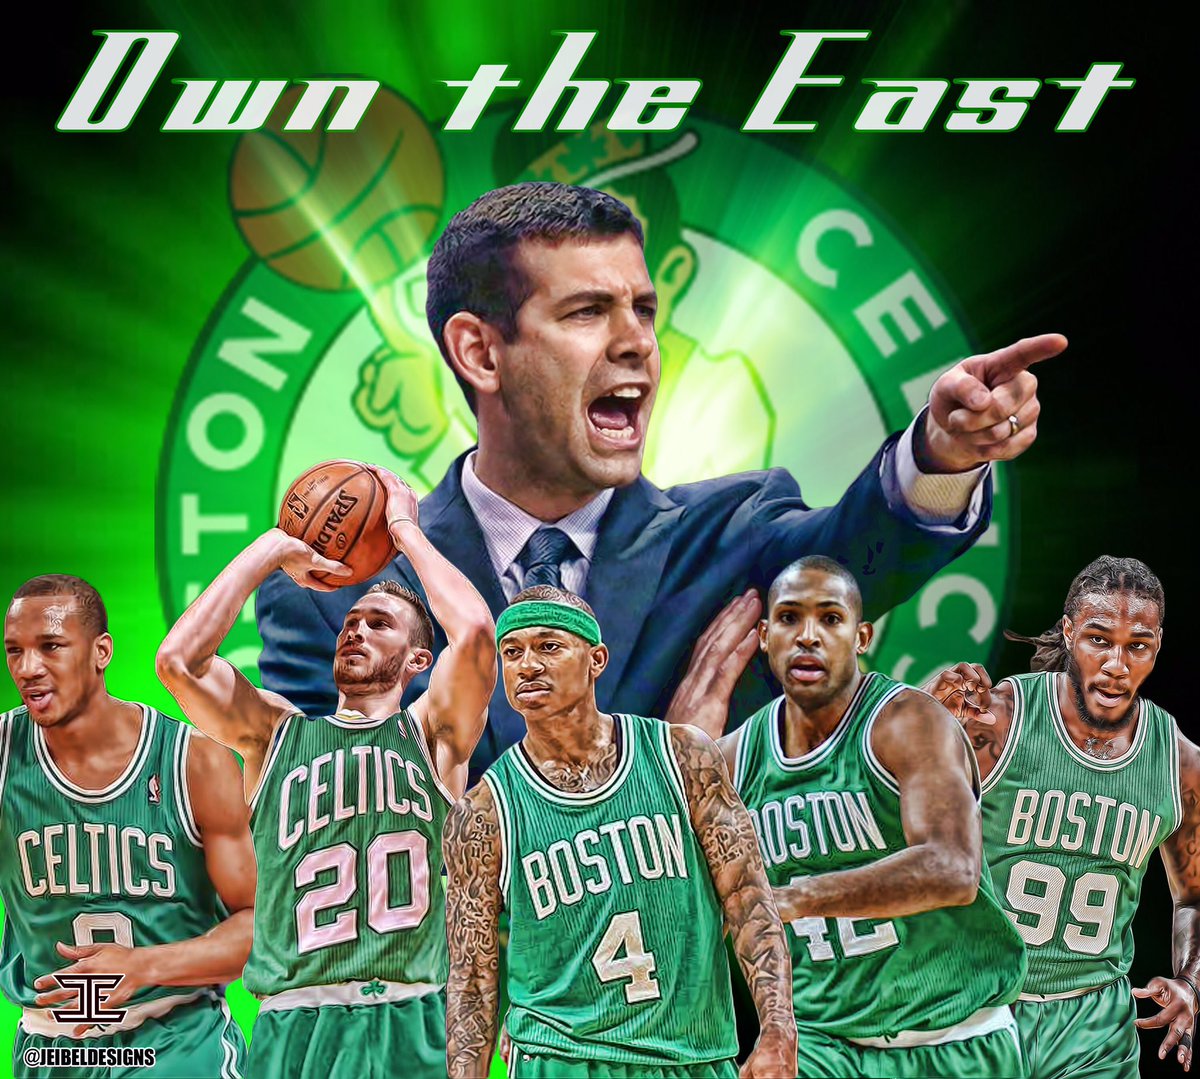 Celtics just punched their ticket to the finals #Celtics @SBNation @SBNationNBA